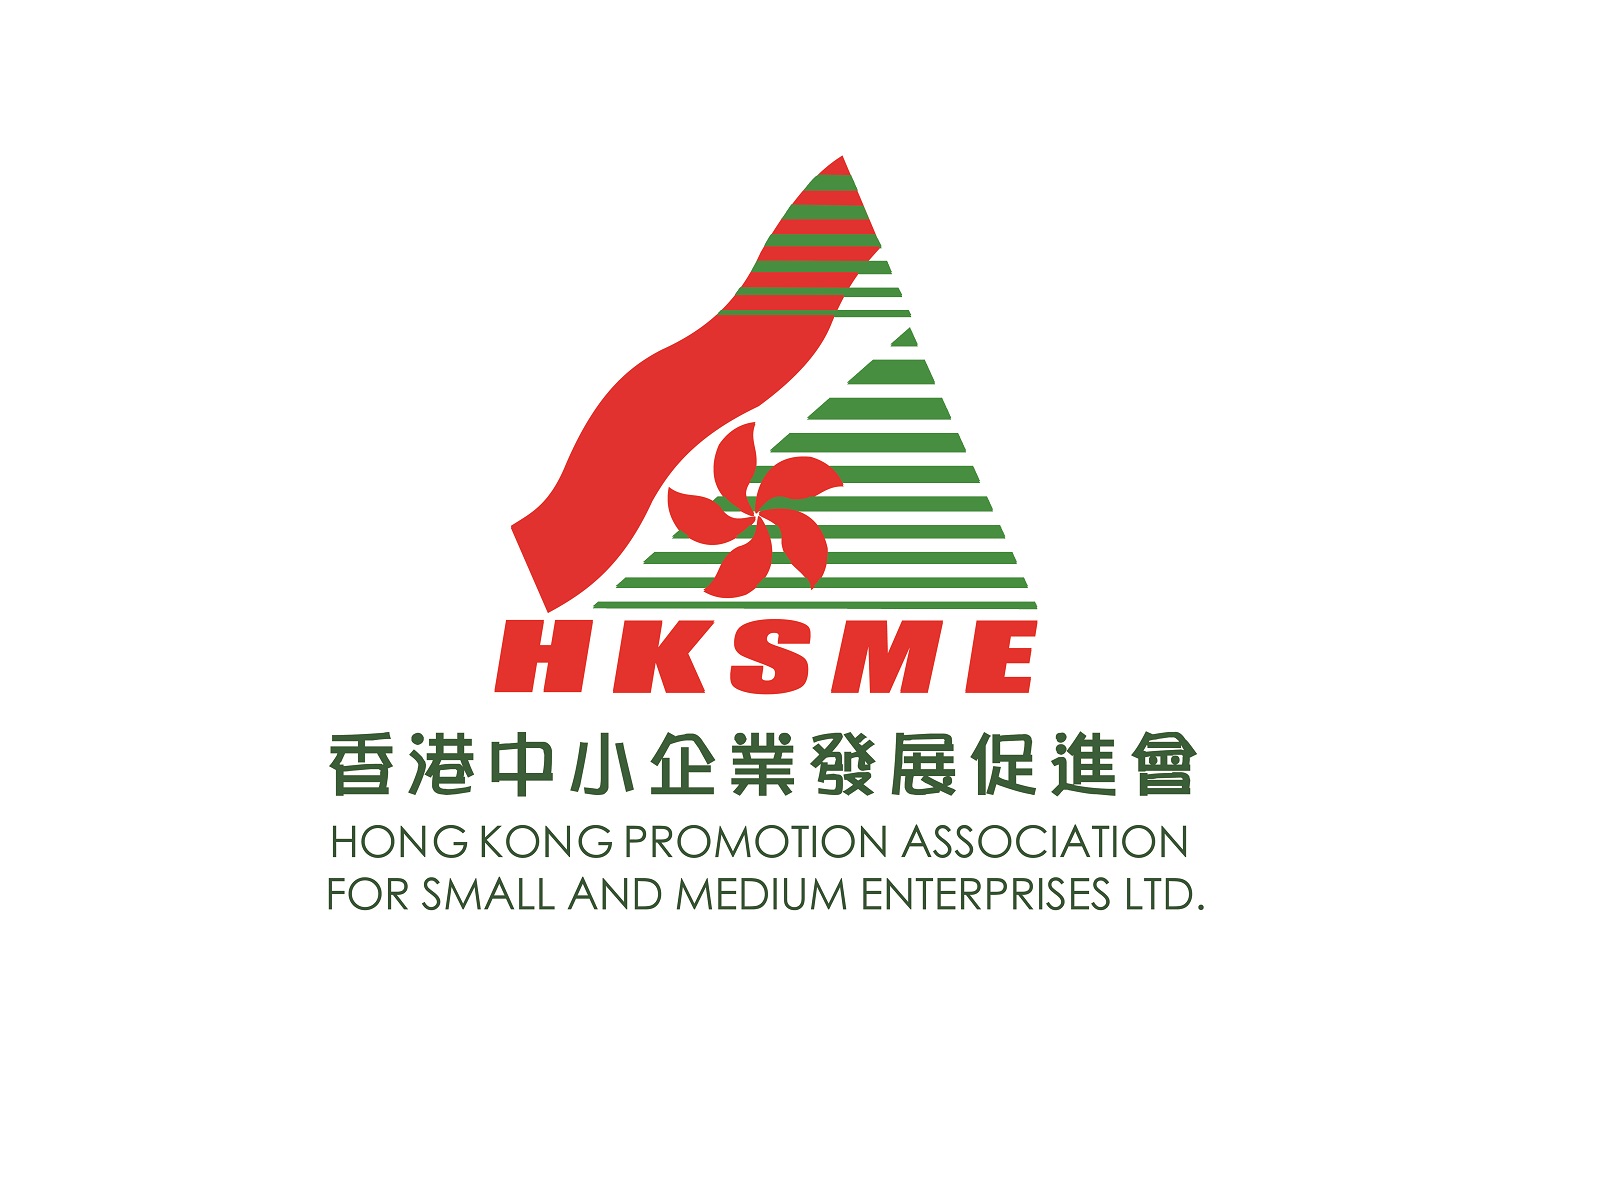 Hong Kong Promotion Association for Small and Medium Enterprises Ltd